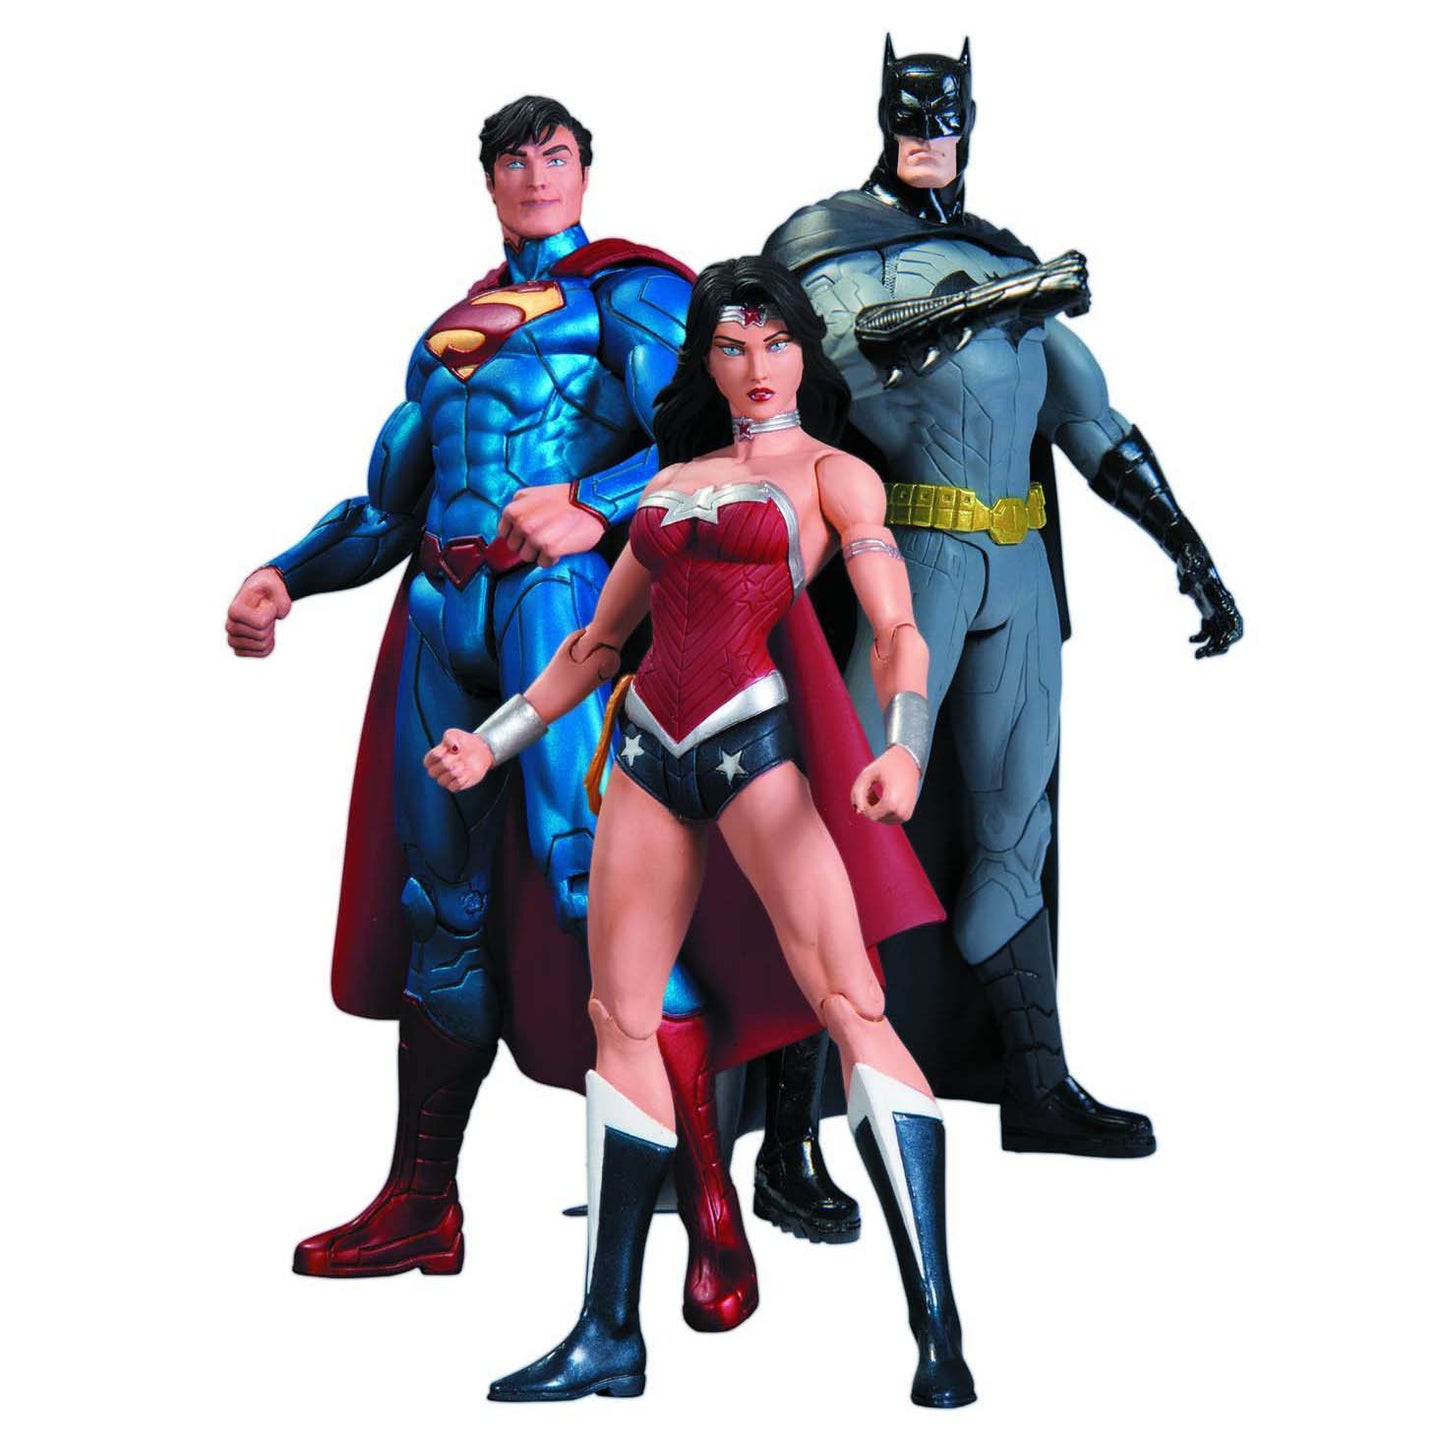 Justice League Trinity War Action Figure Box Set with 7 Inch poseable superman batman wonder woman action figures